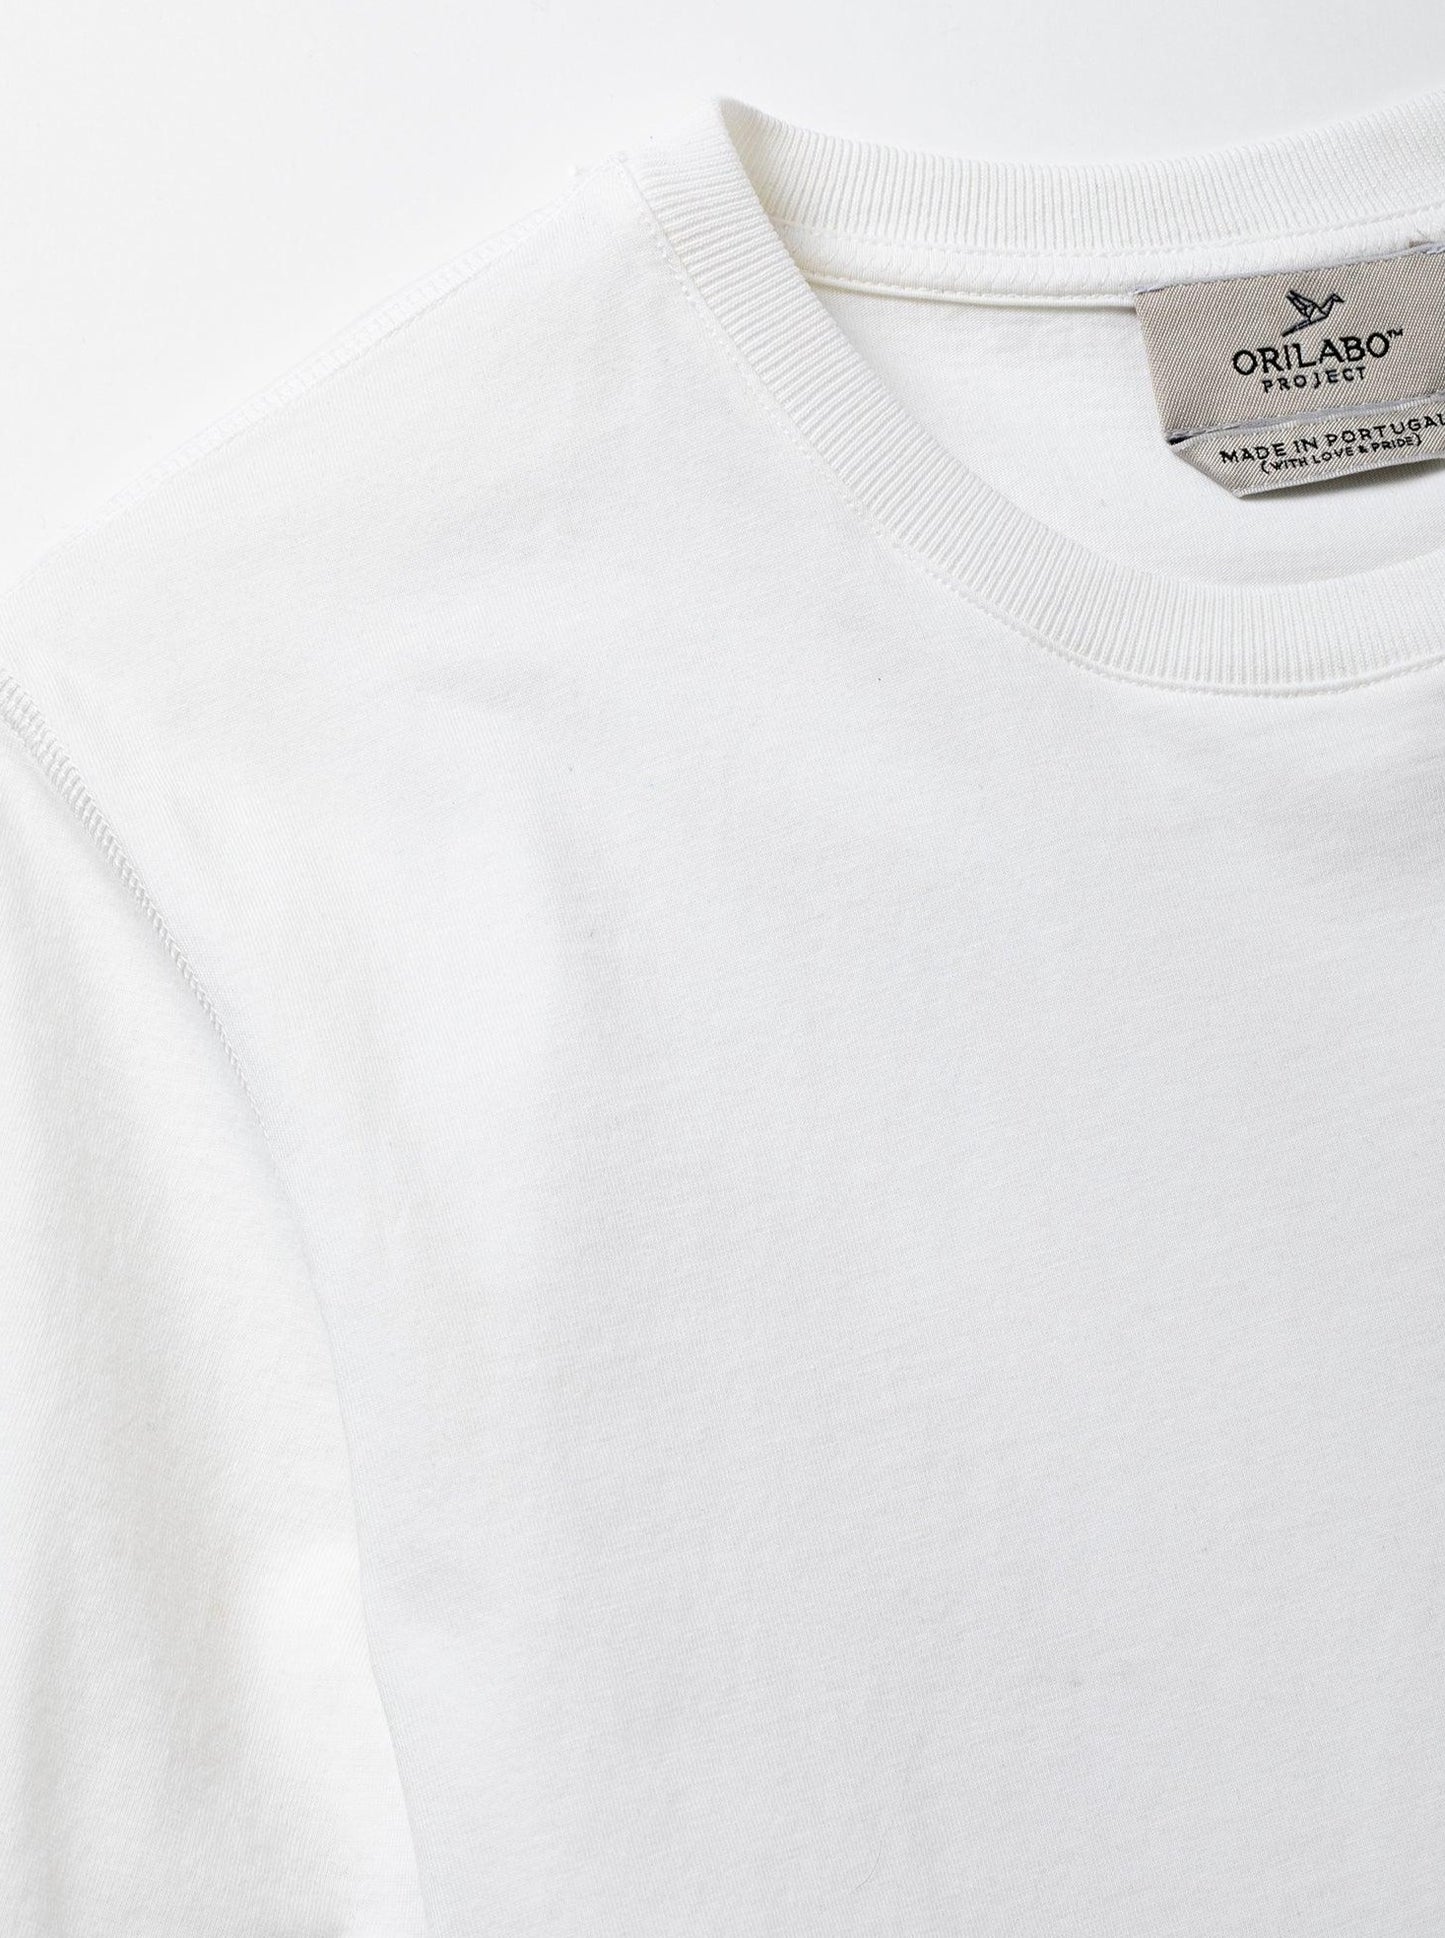 
                  
                    Women's Small Logo T-shirt - White - ORILABO Project
                  
                